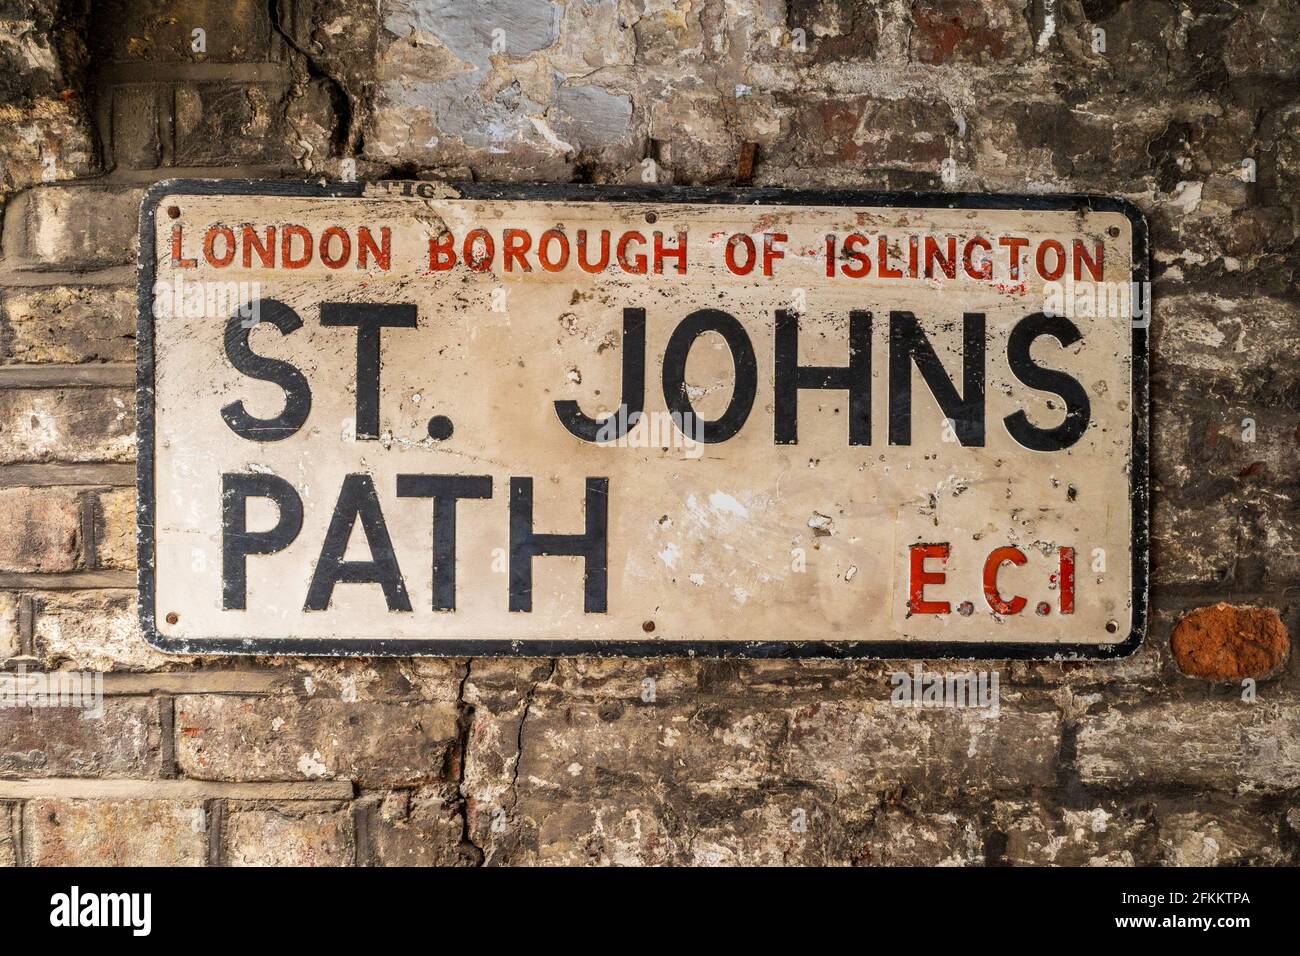 St Johns Path Street Sign Islington London E.C.1. Vintage London Street Signs. St. Johns Path EC1. Stock Photo